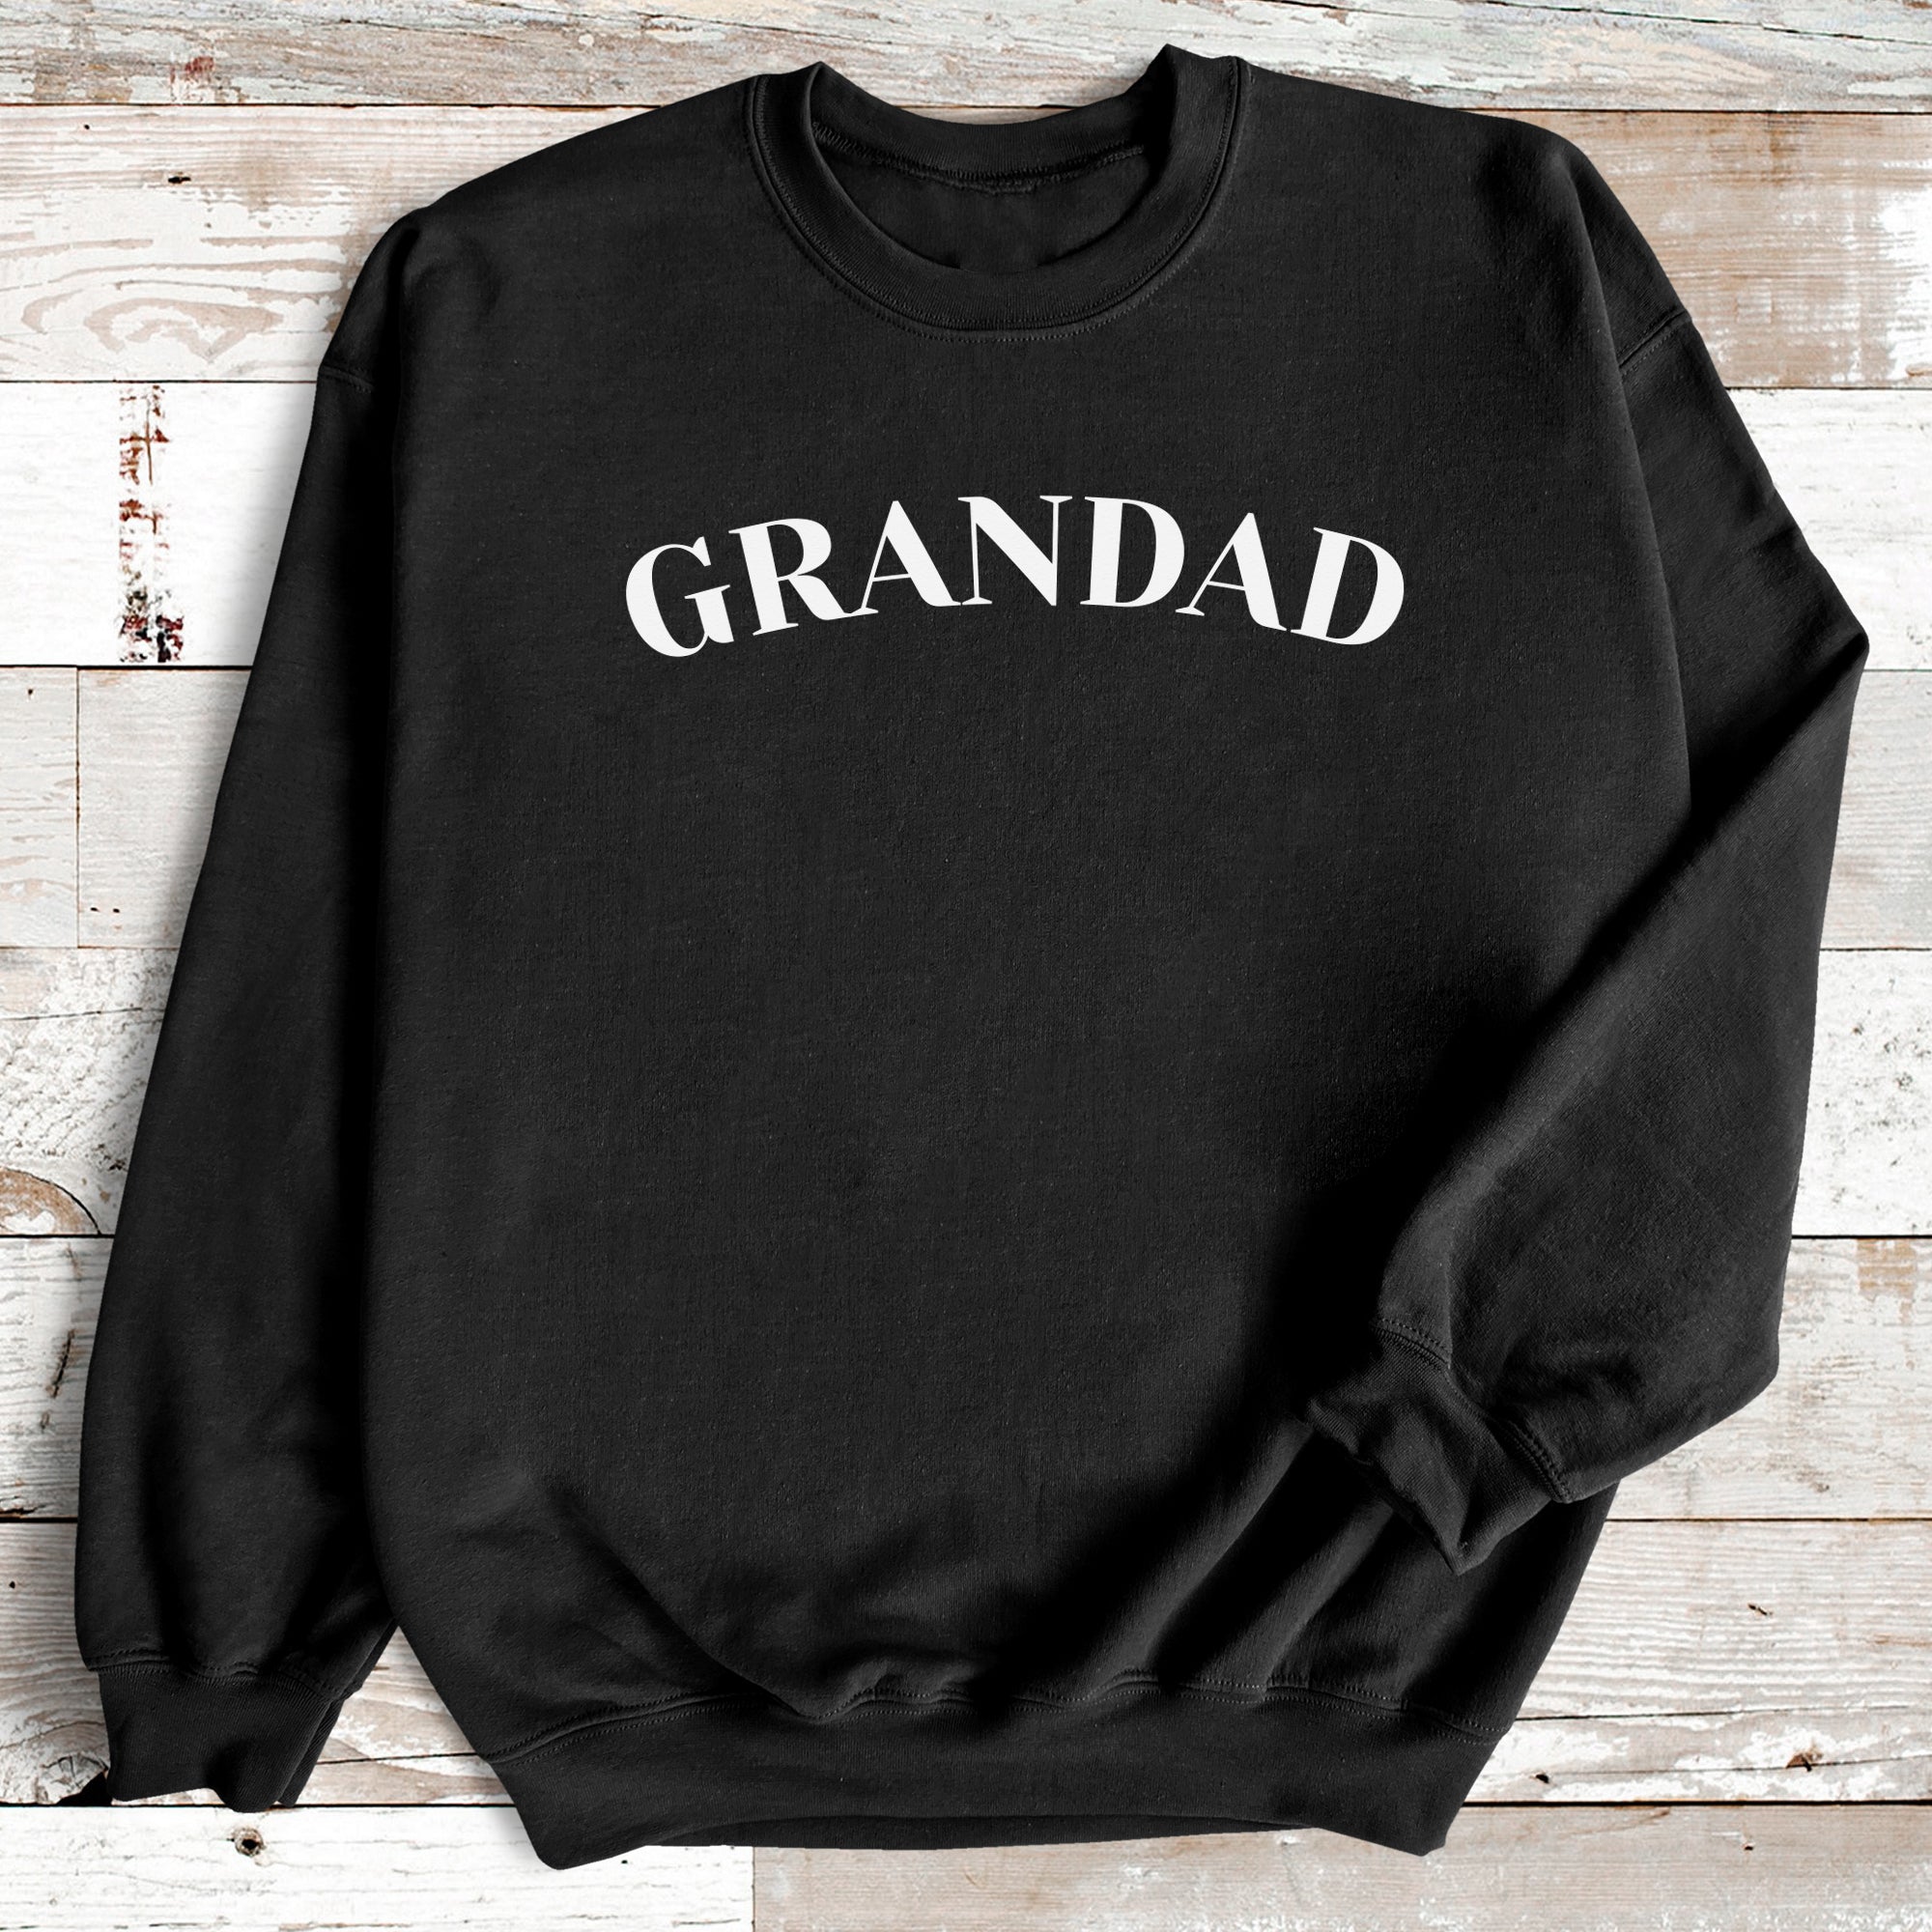 Grandad - Mens Sweater - Grandad Sweater